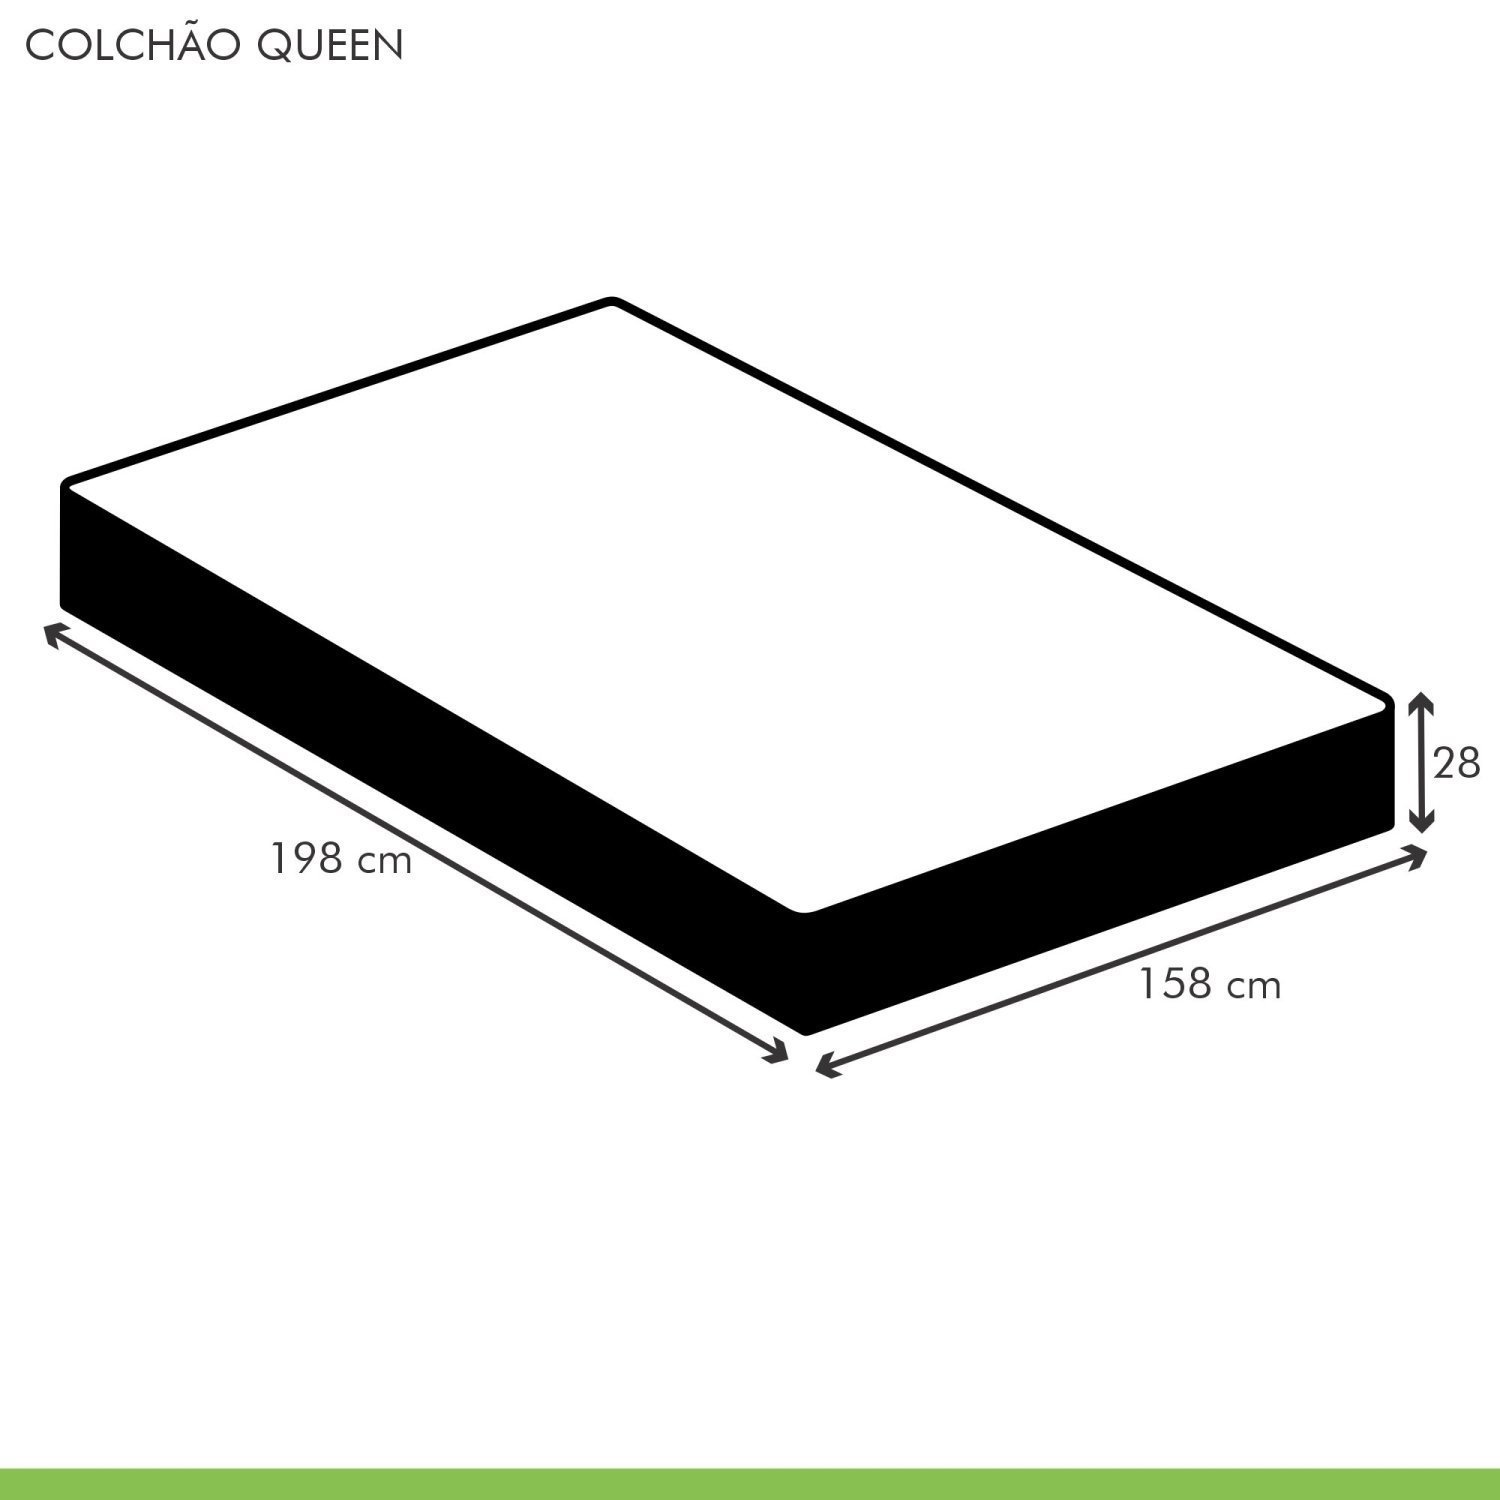 Colchão Queen Molas Extrapedic Íris 28x158x198cm  - 5